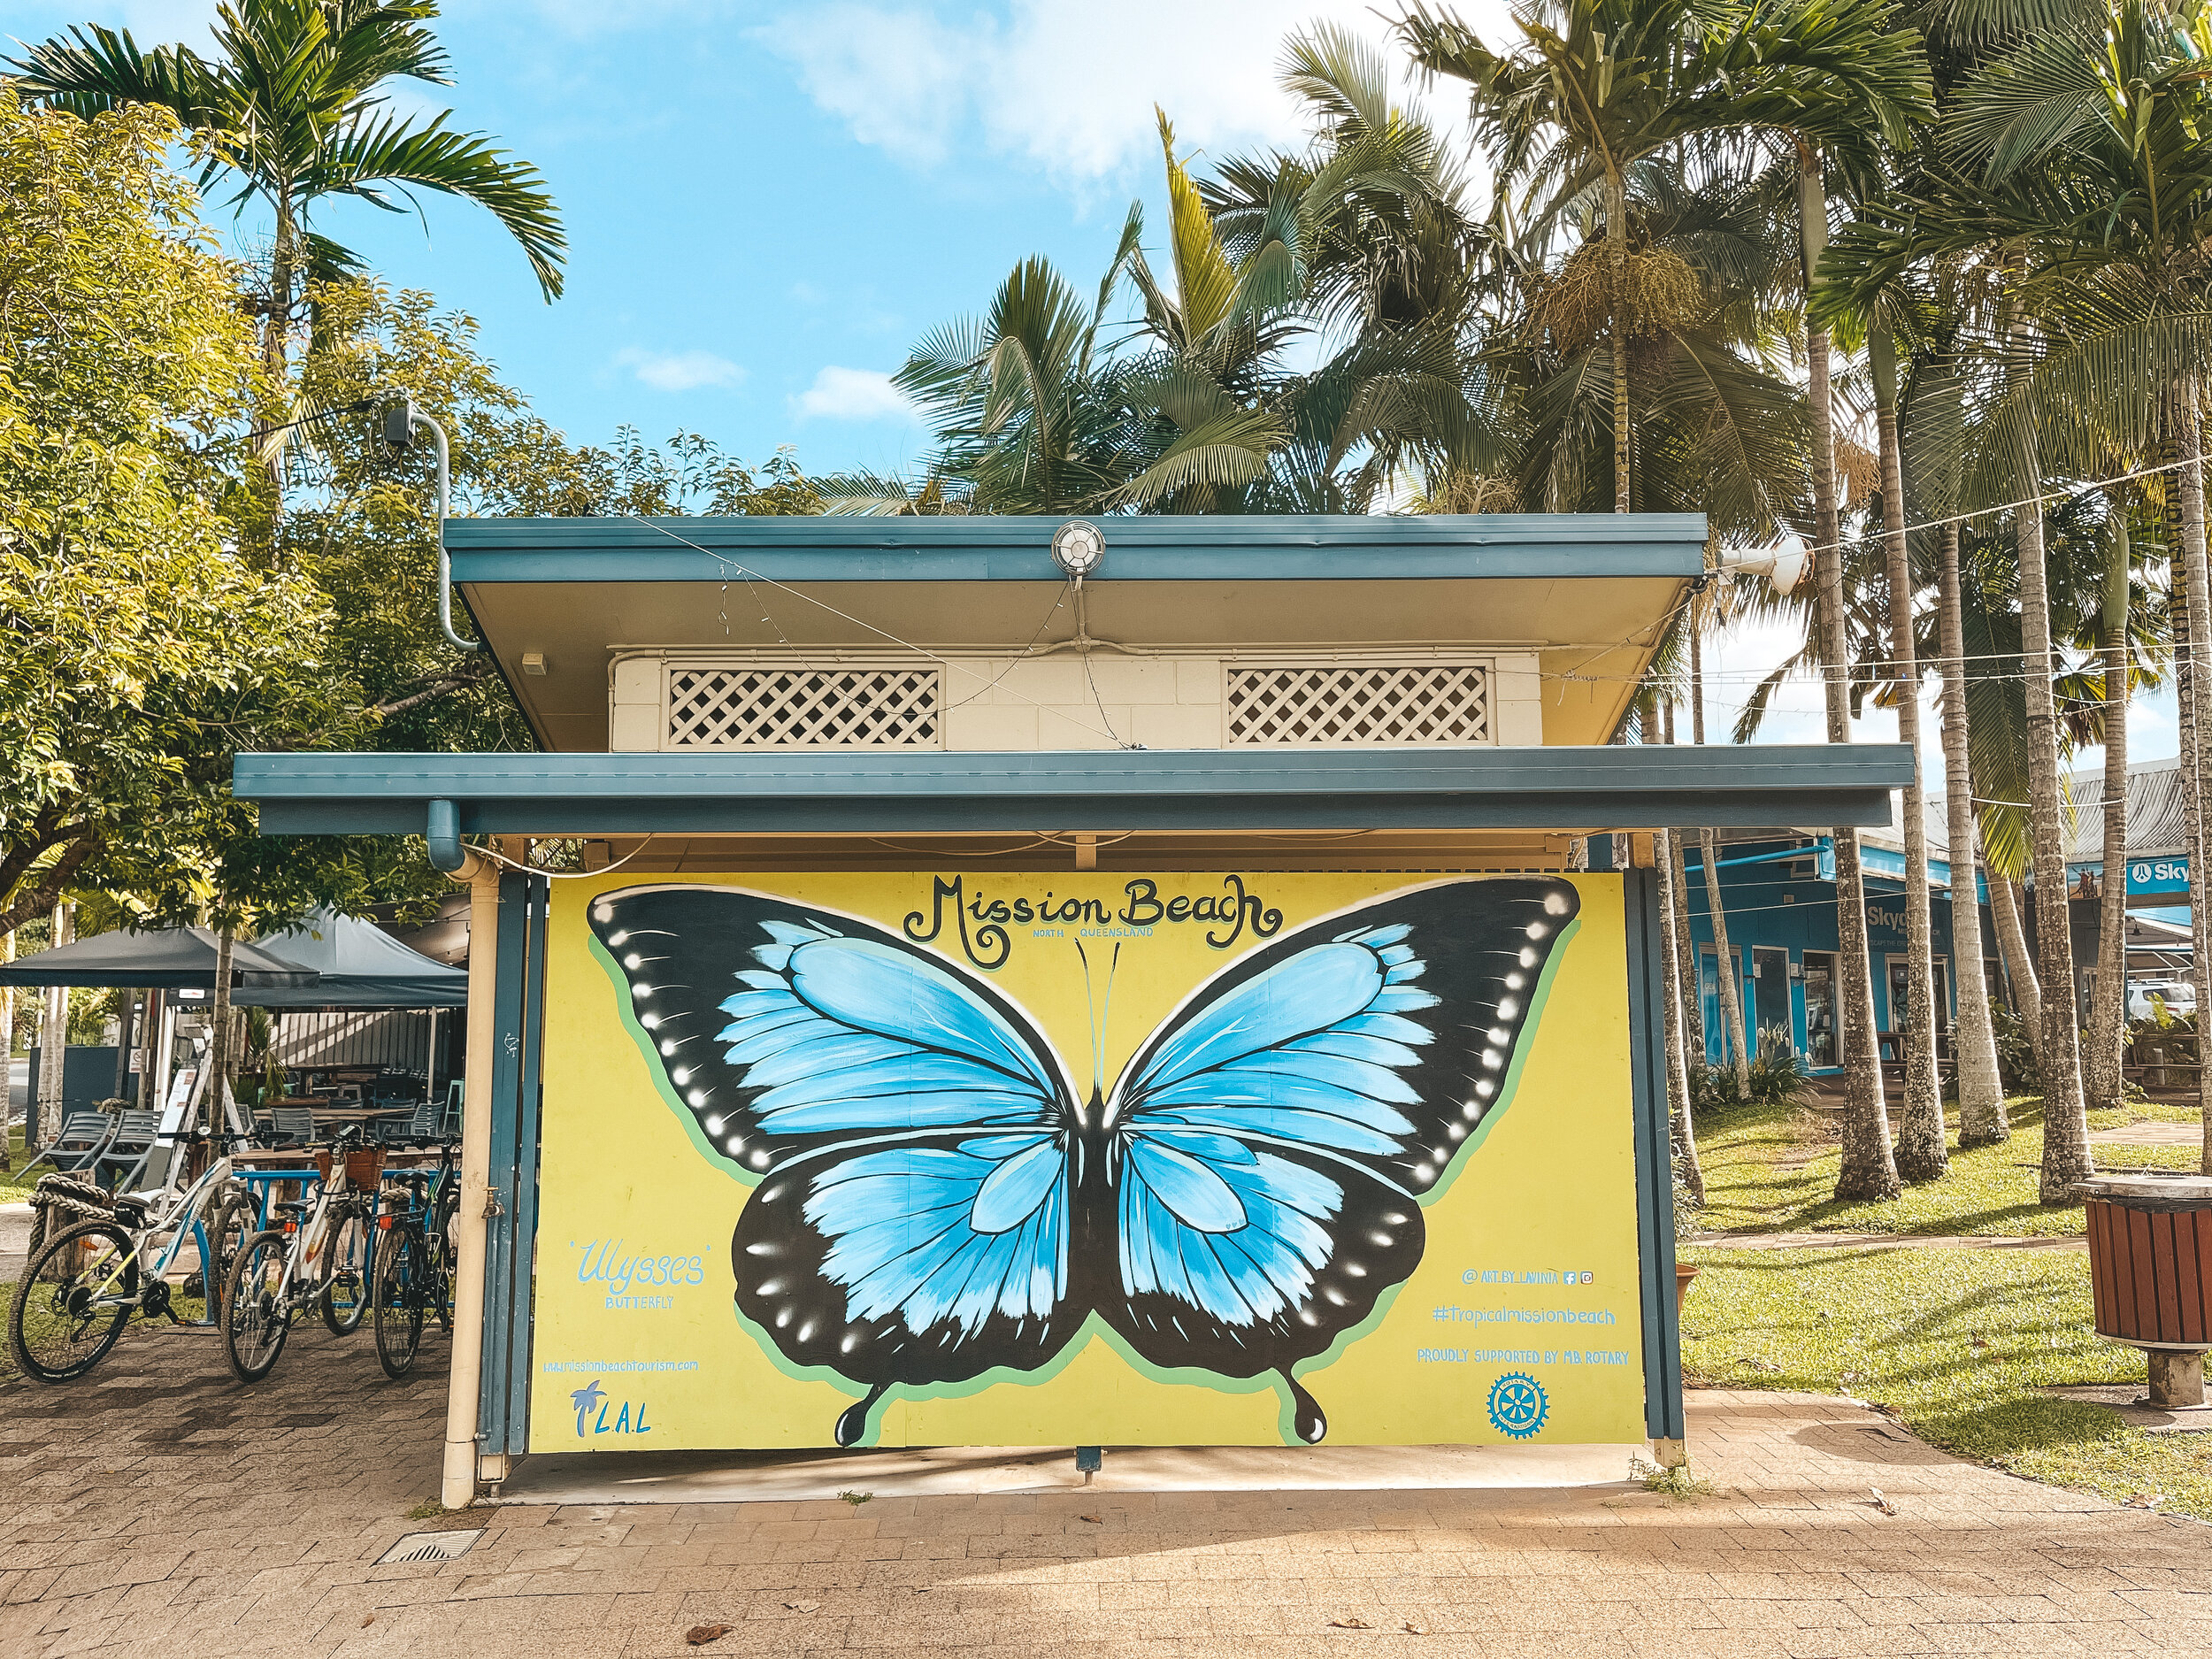 Mission Beach Public Toilet - Tropical North Queensland (QLD) - Australia